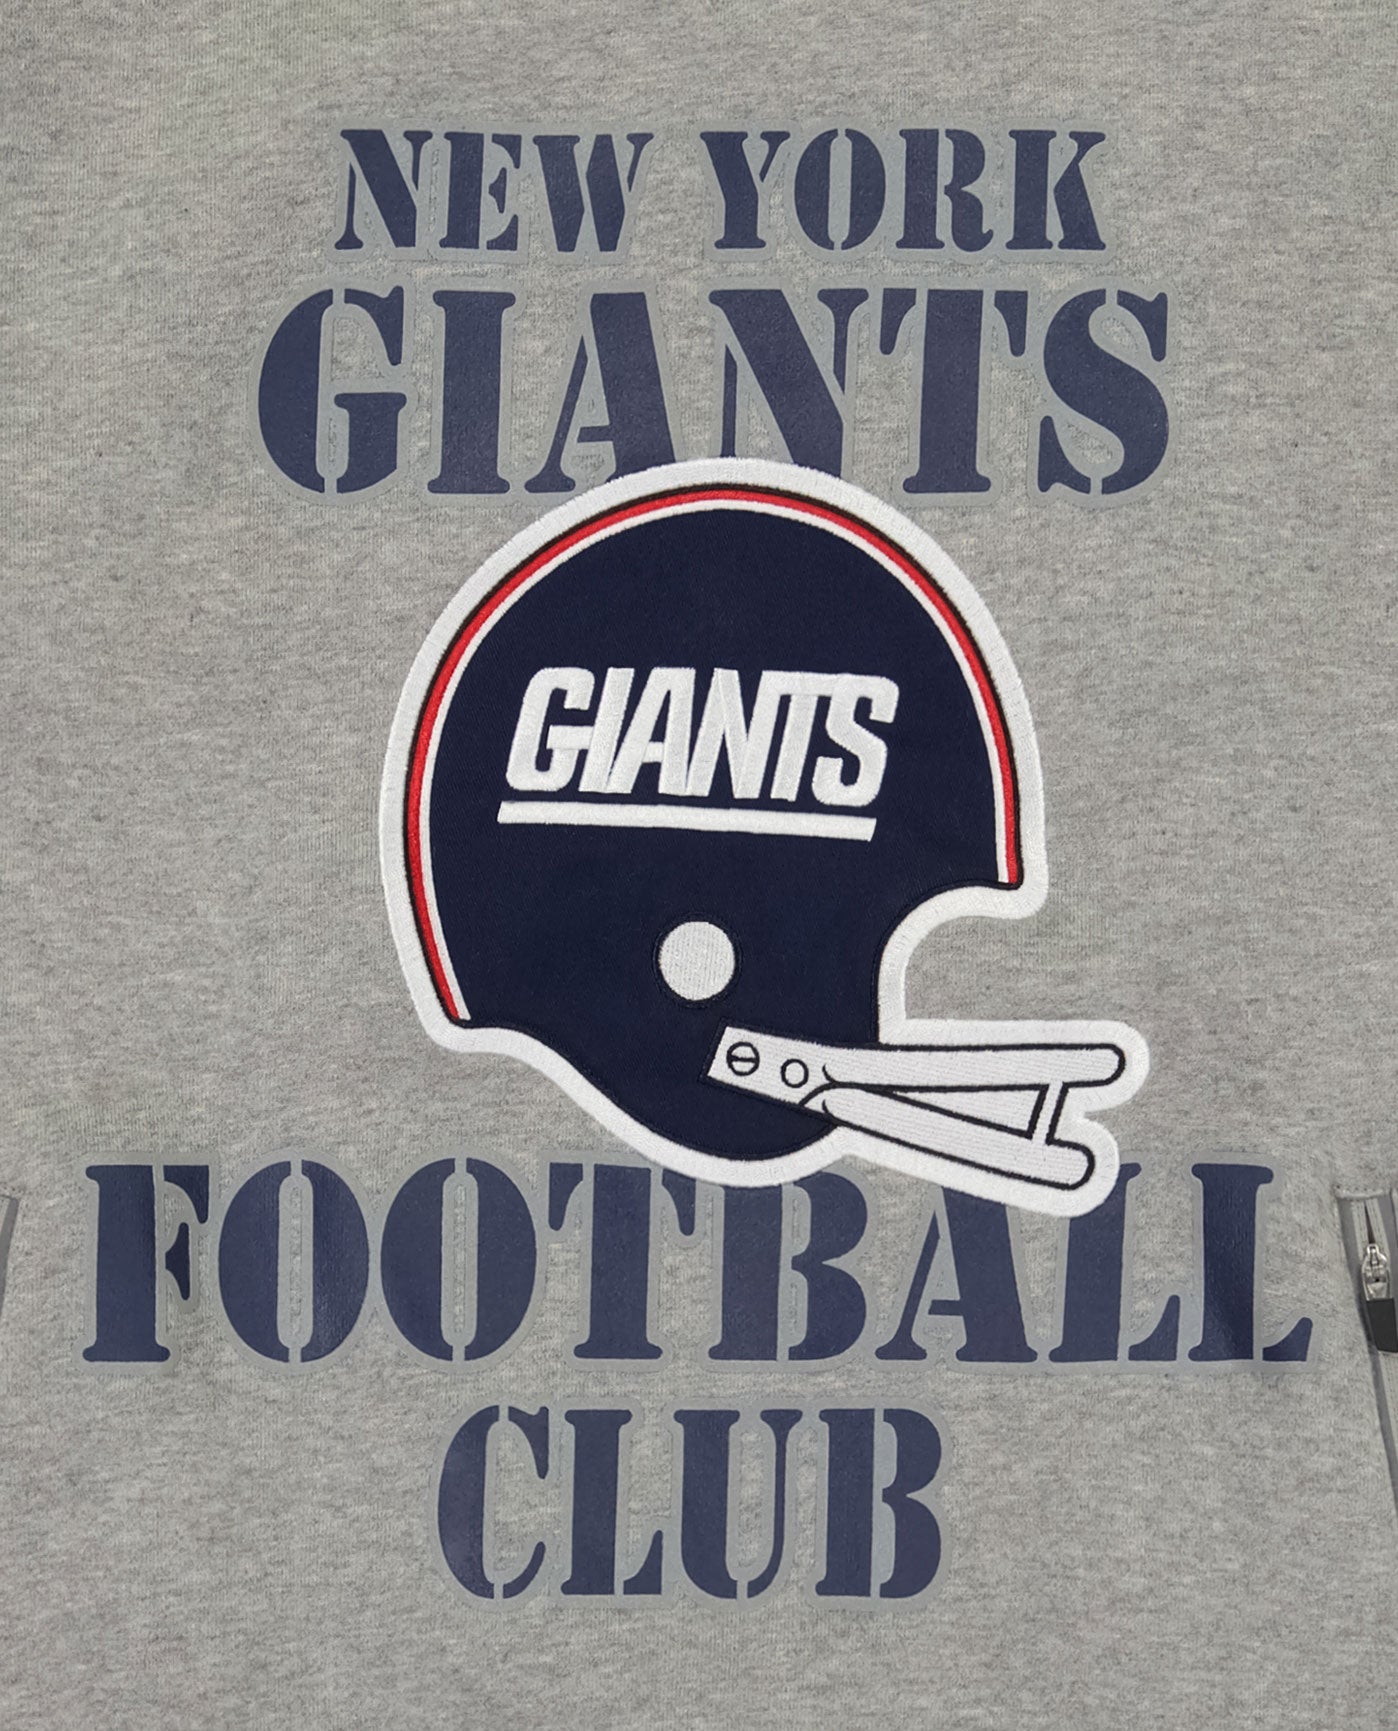 NEW YORK GIANTS FOOTBALL CLUB writing and helmet logo front | Giants Heather Grey